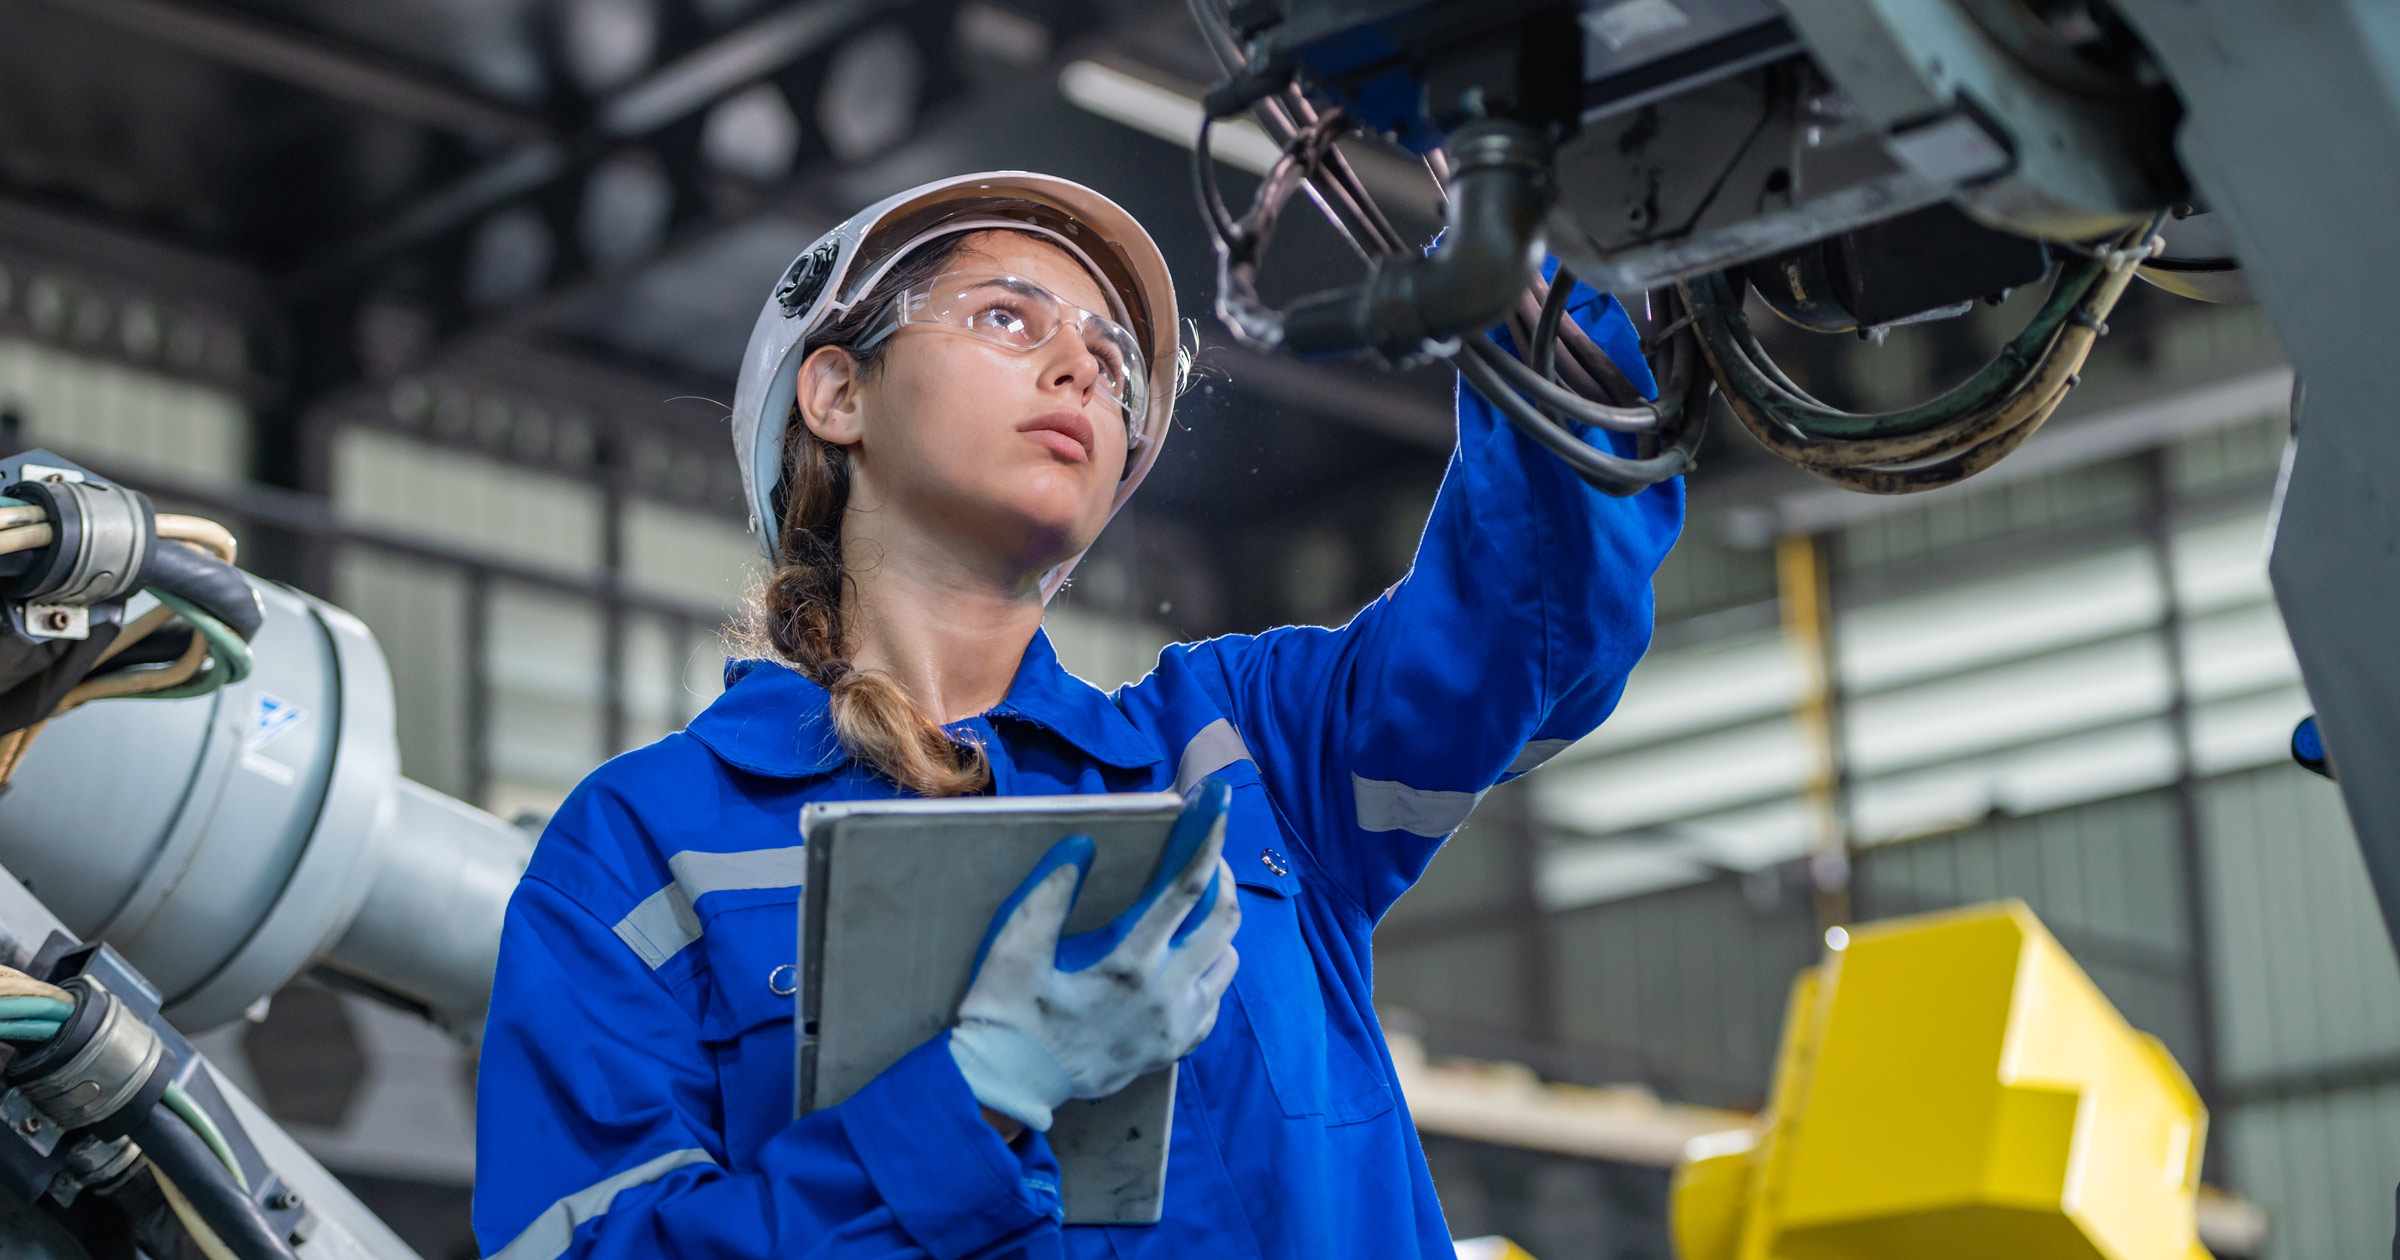 A young female engineer checks a machine.